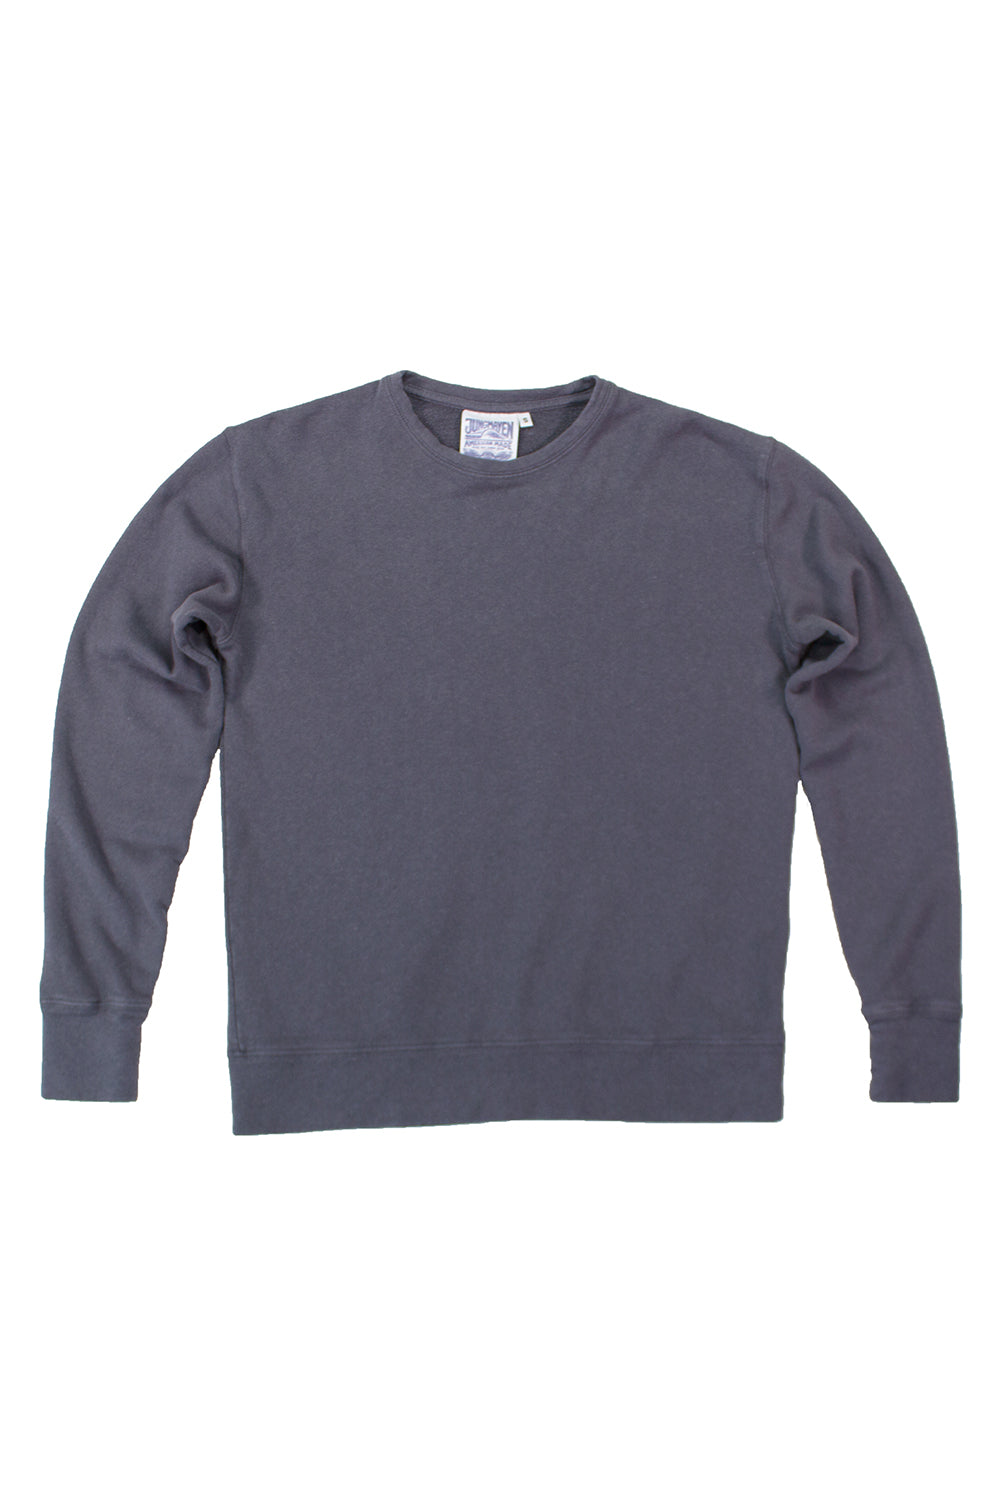 Tahoe Sweatshirt | Jungmaven Hemp Clothing & Accessories / Color: Diesel Gray